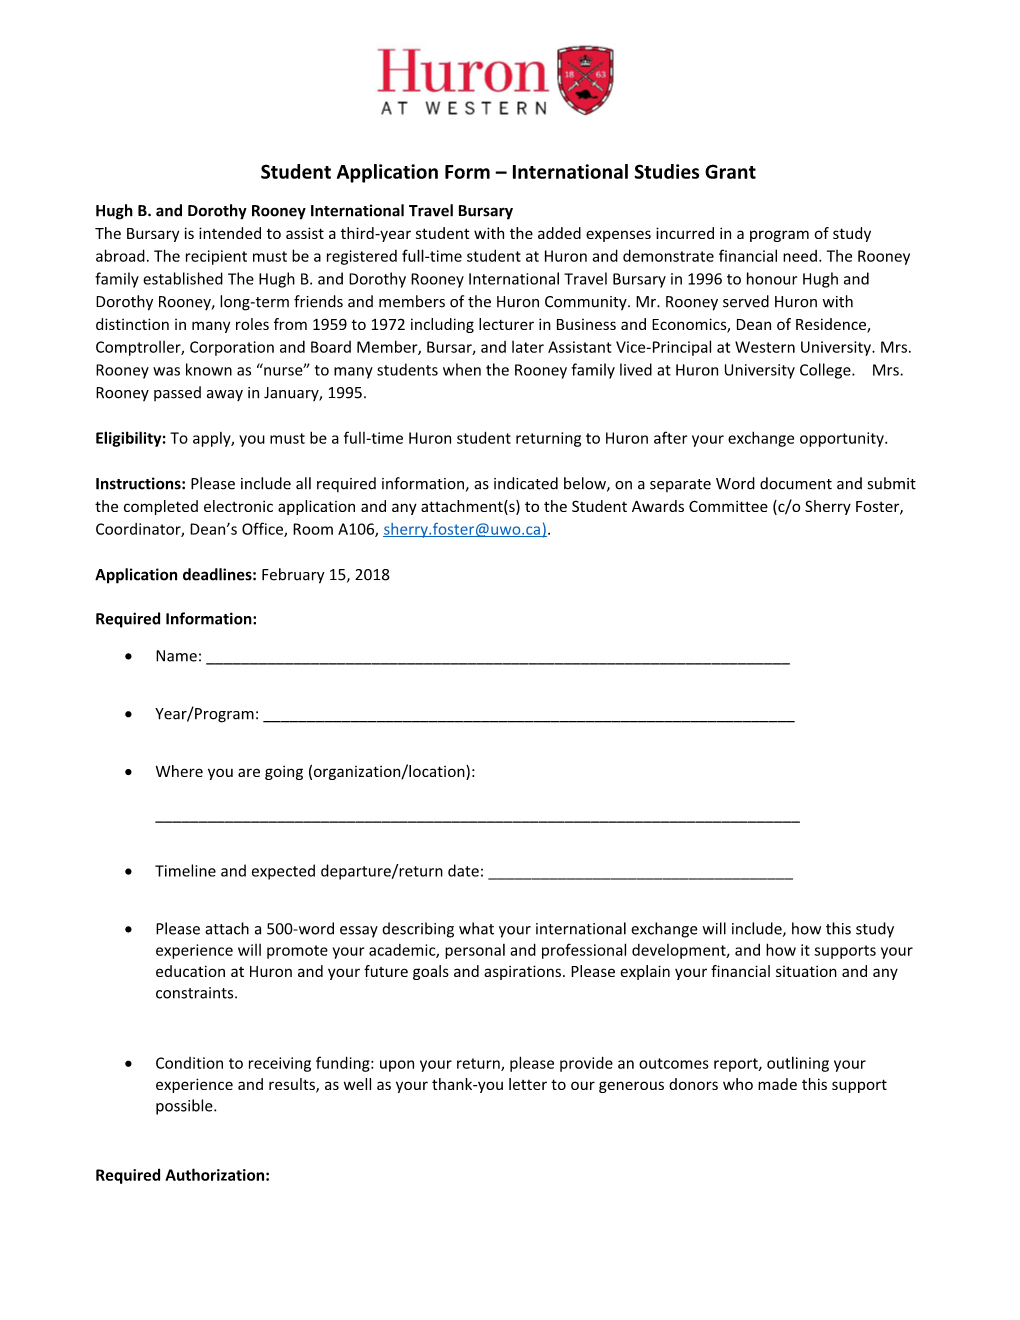 Student Application Form International Studies Grant